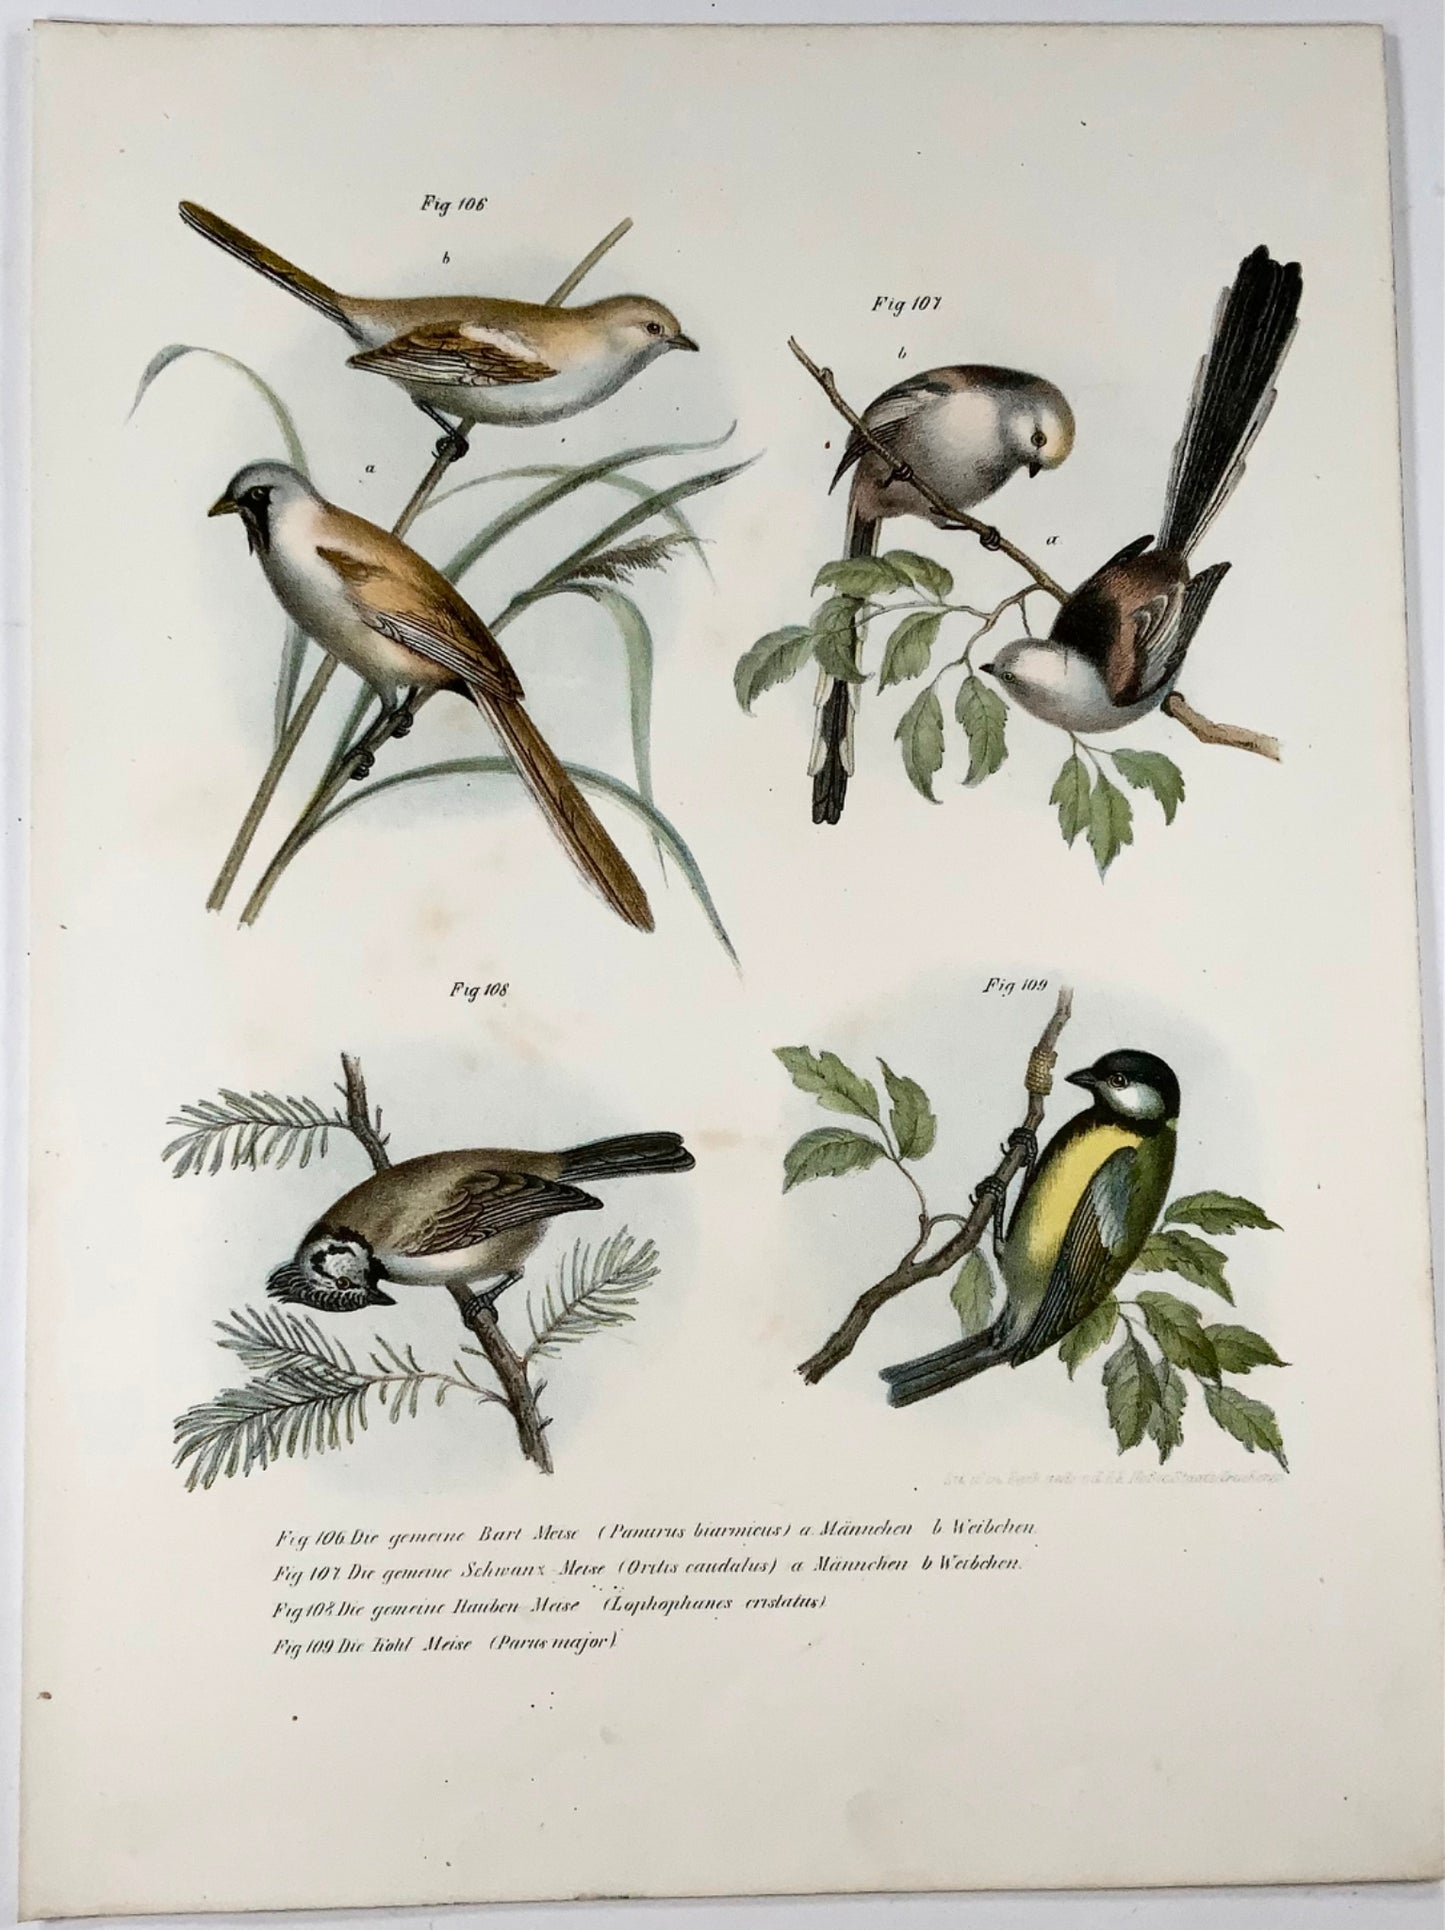 1860 Tits, Fitzinger, colour lithograph, hand finish, ornithology